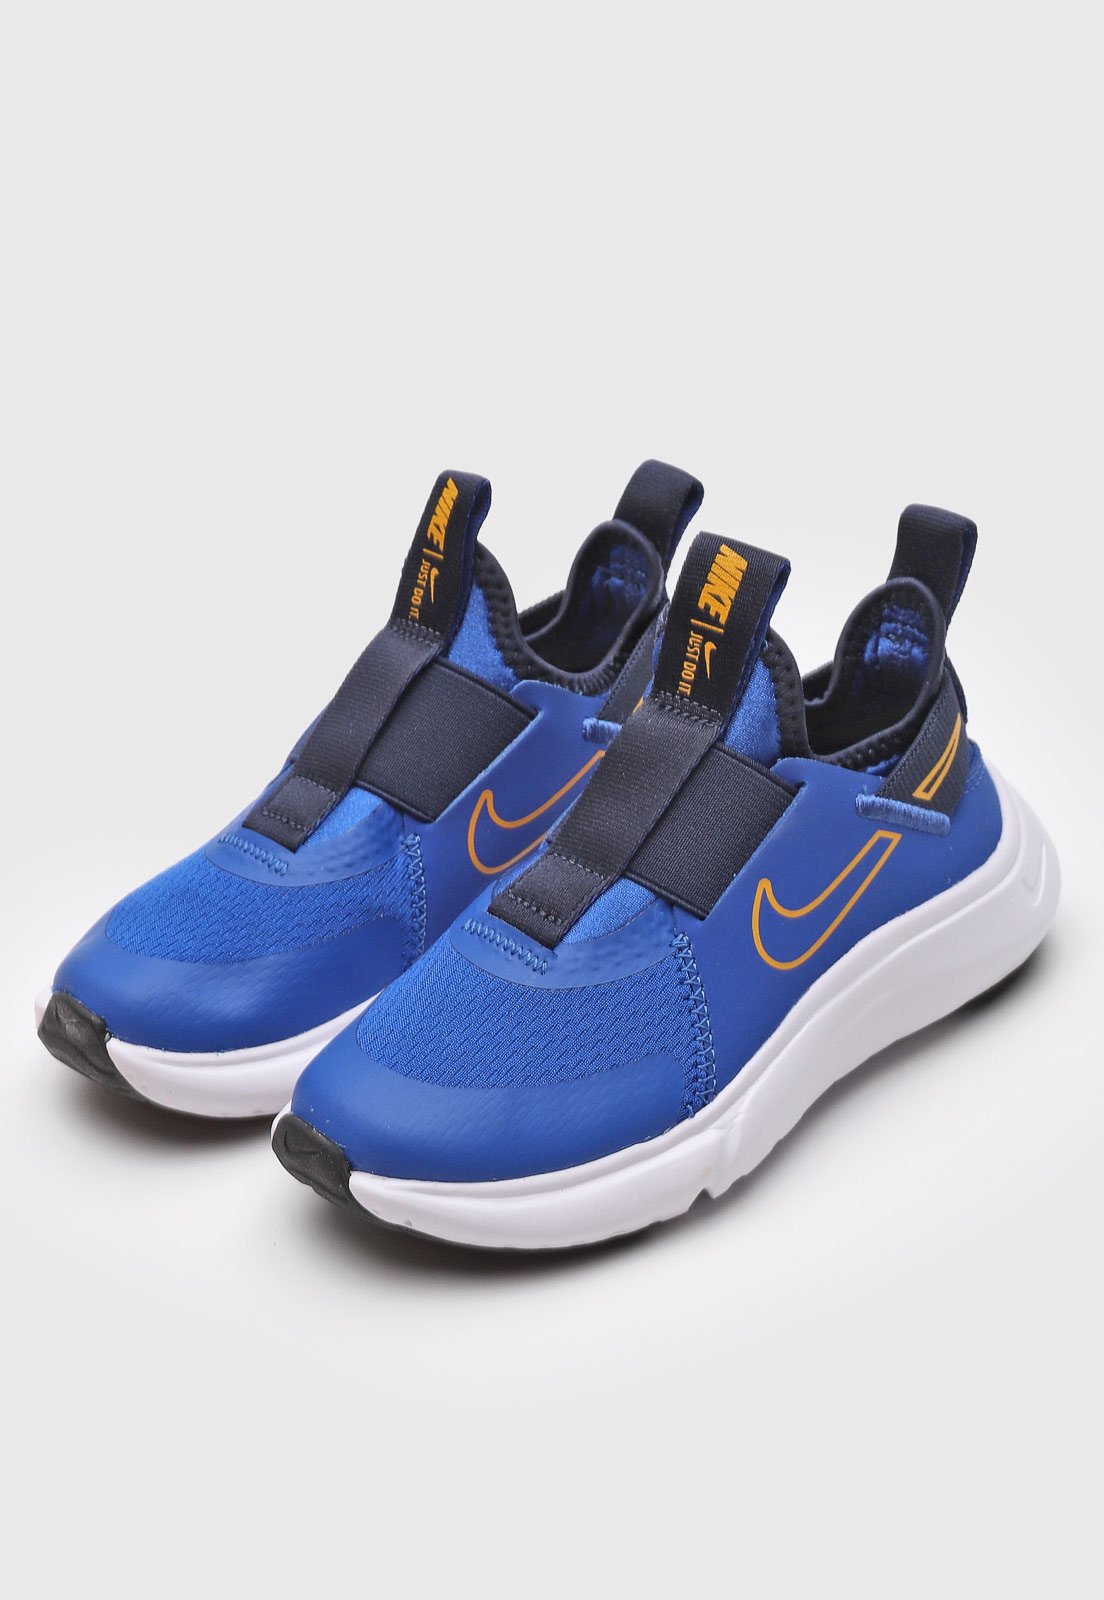 electrodo Actualizar Admirable Tênis Nike Infantil Flex Plus Azul - Compre Agora | Dafiti Brasil